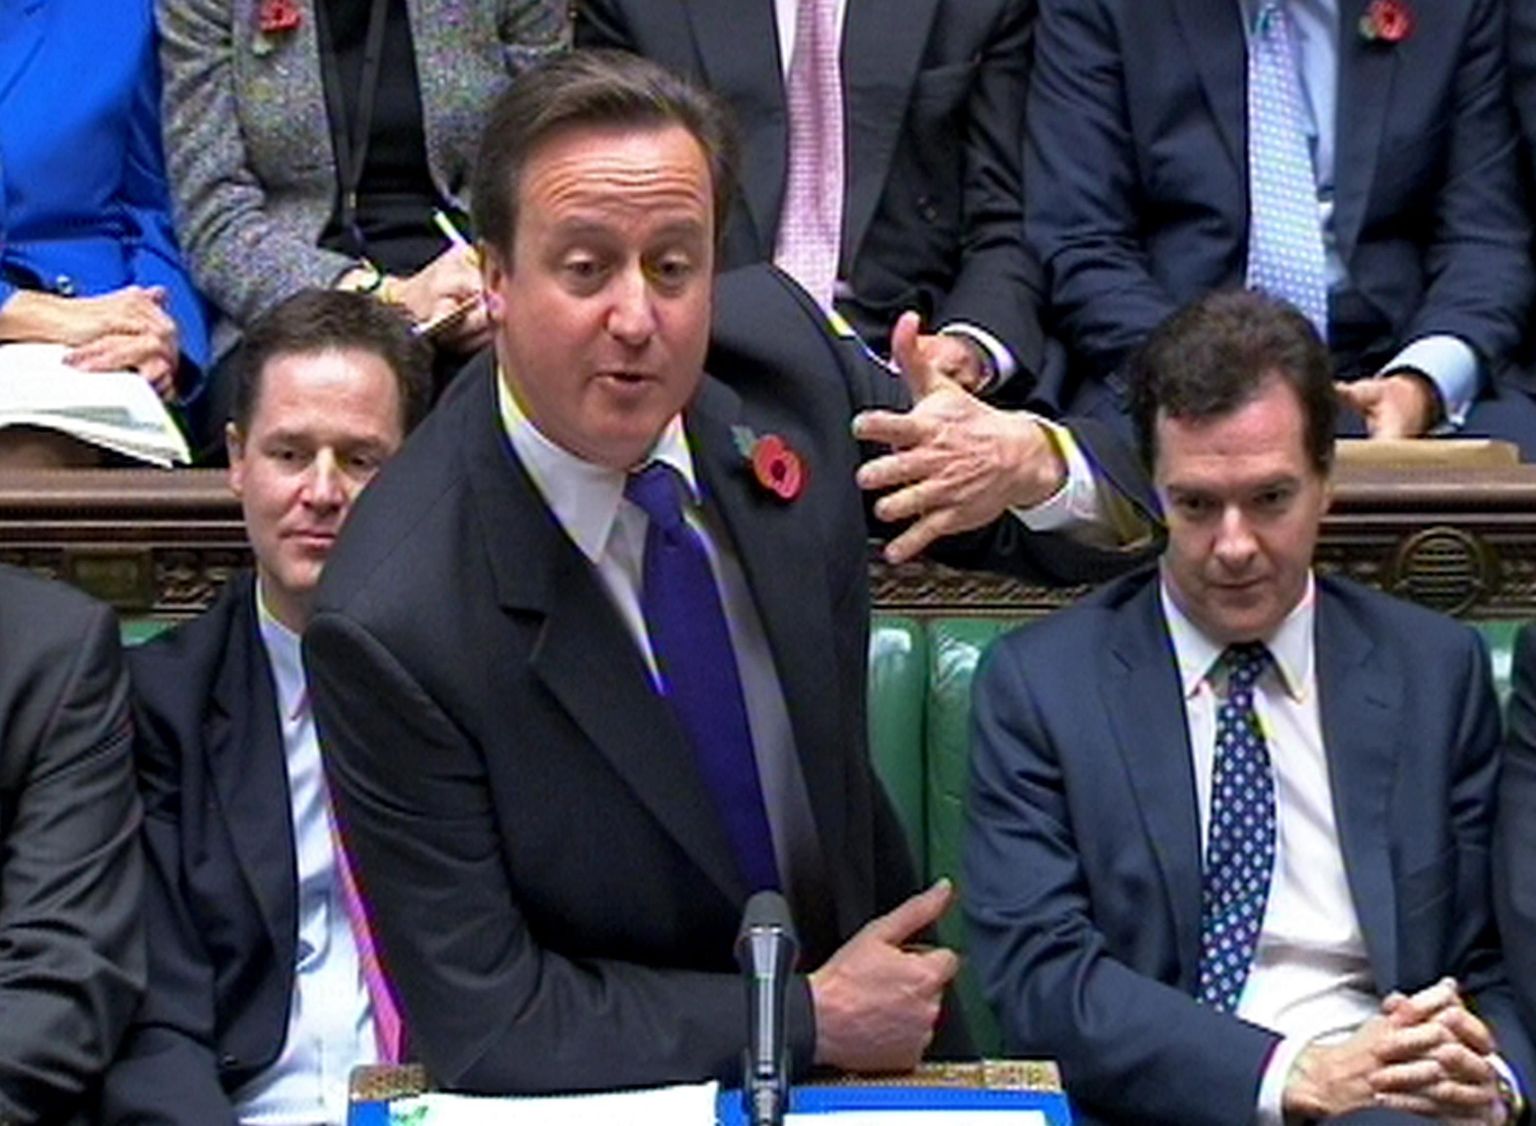 Briti peaminister David Cameron parlamendis.